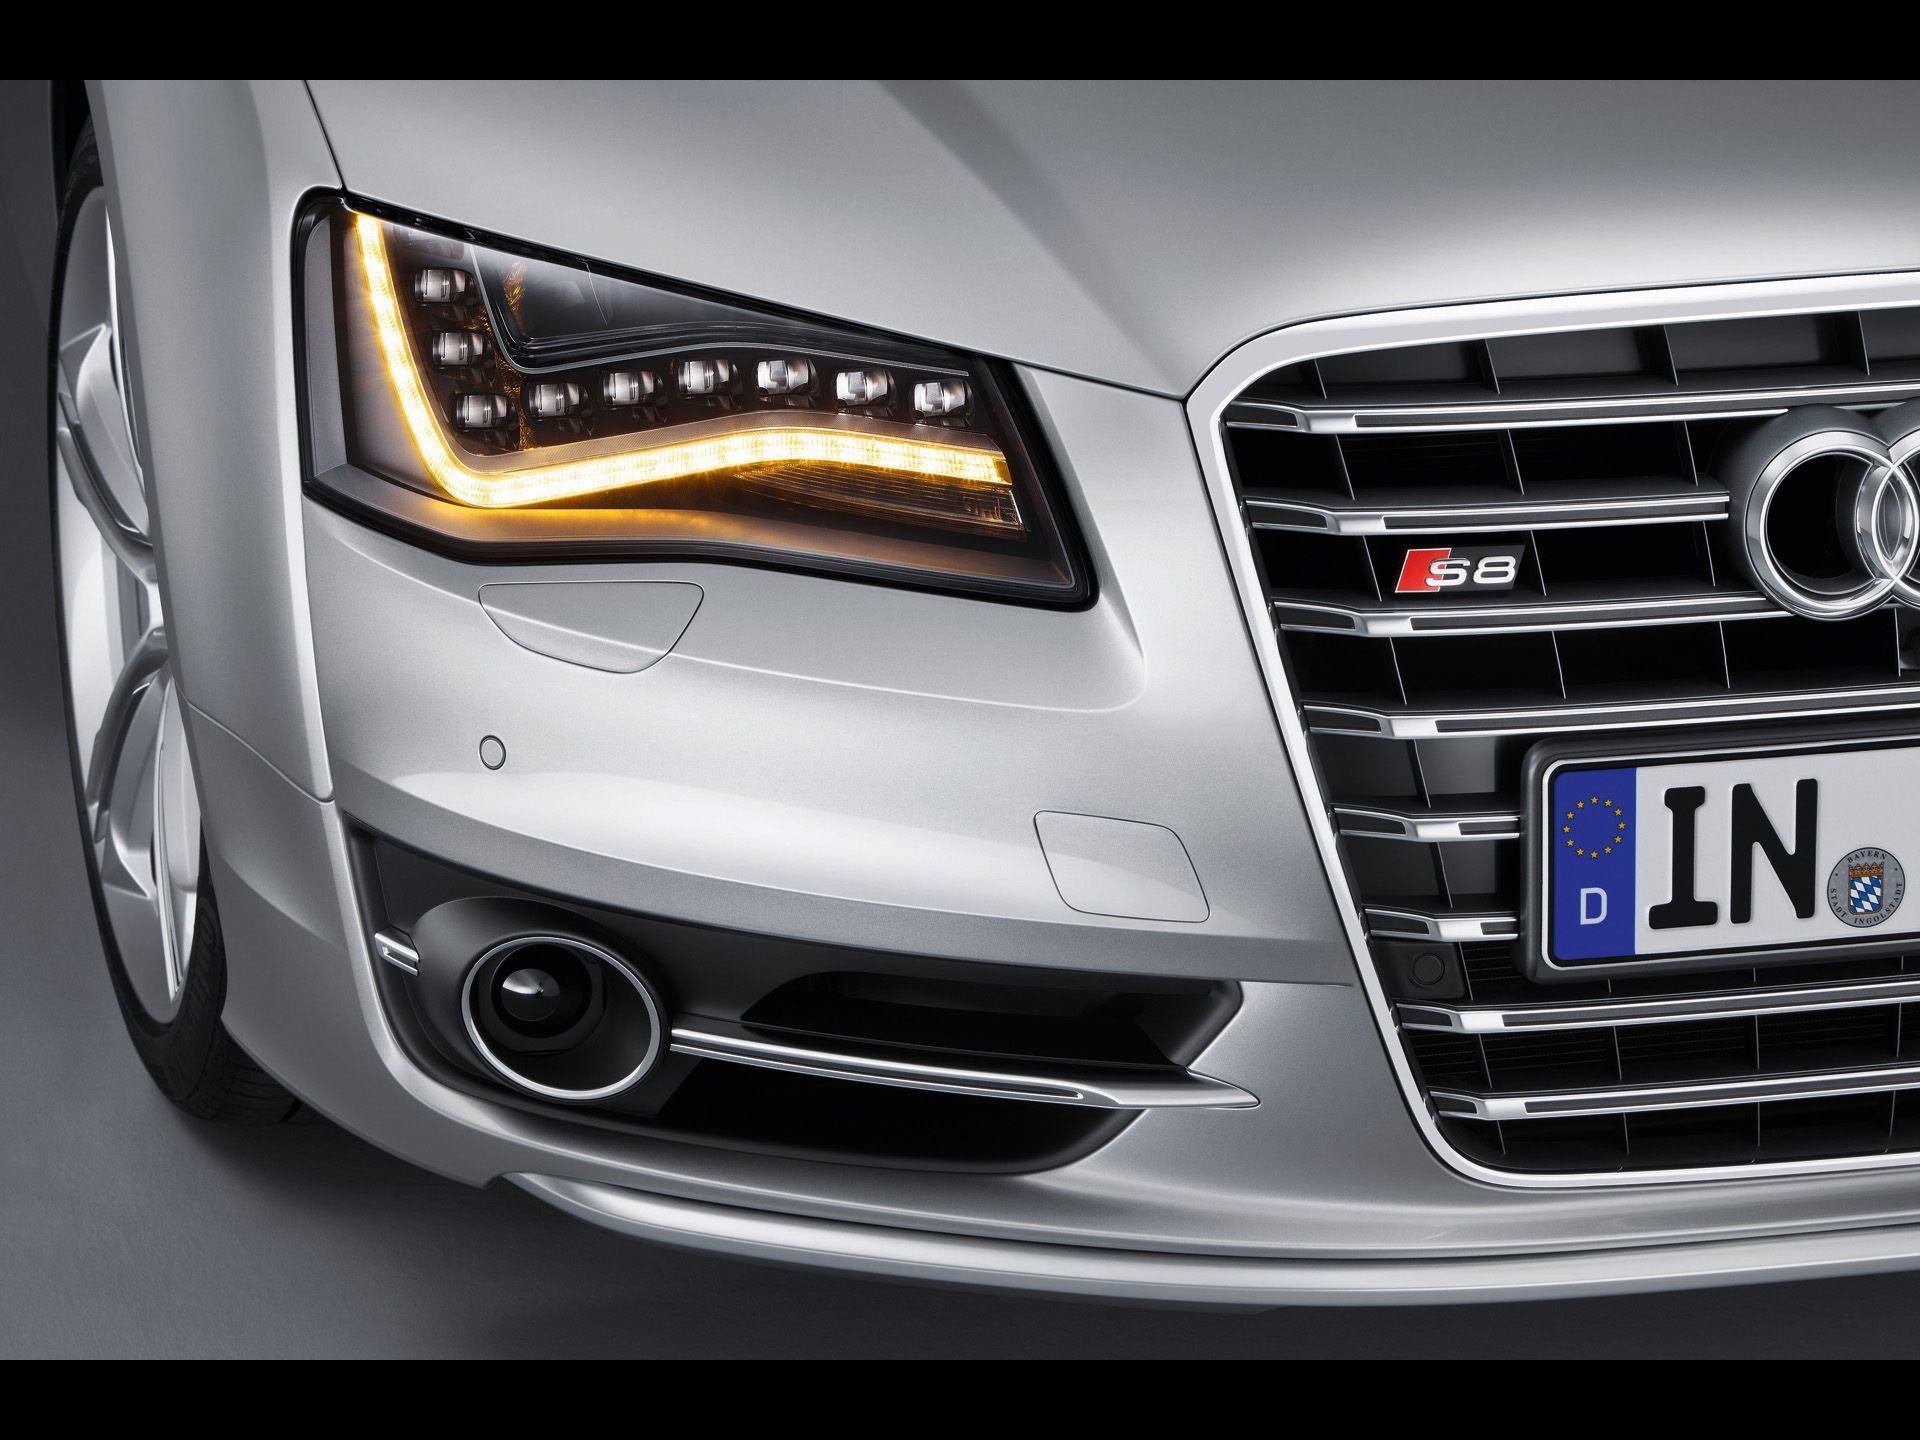 Audi S8 Headlights wallpaper Audi S8 Headlights stock